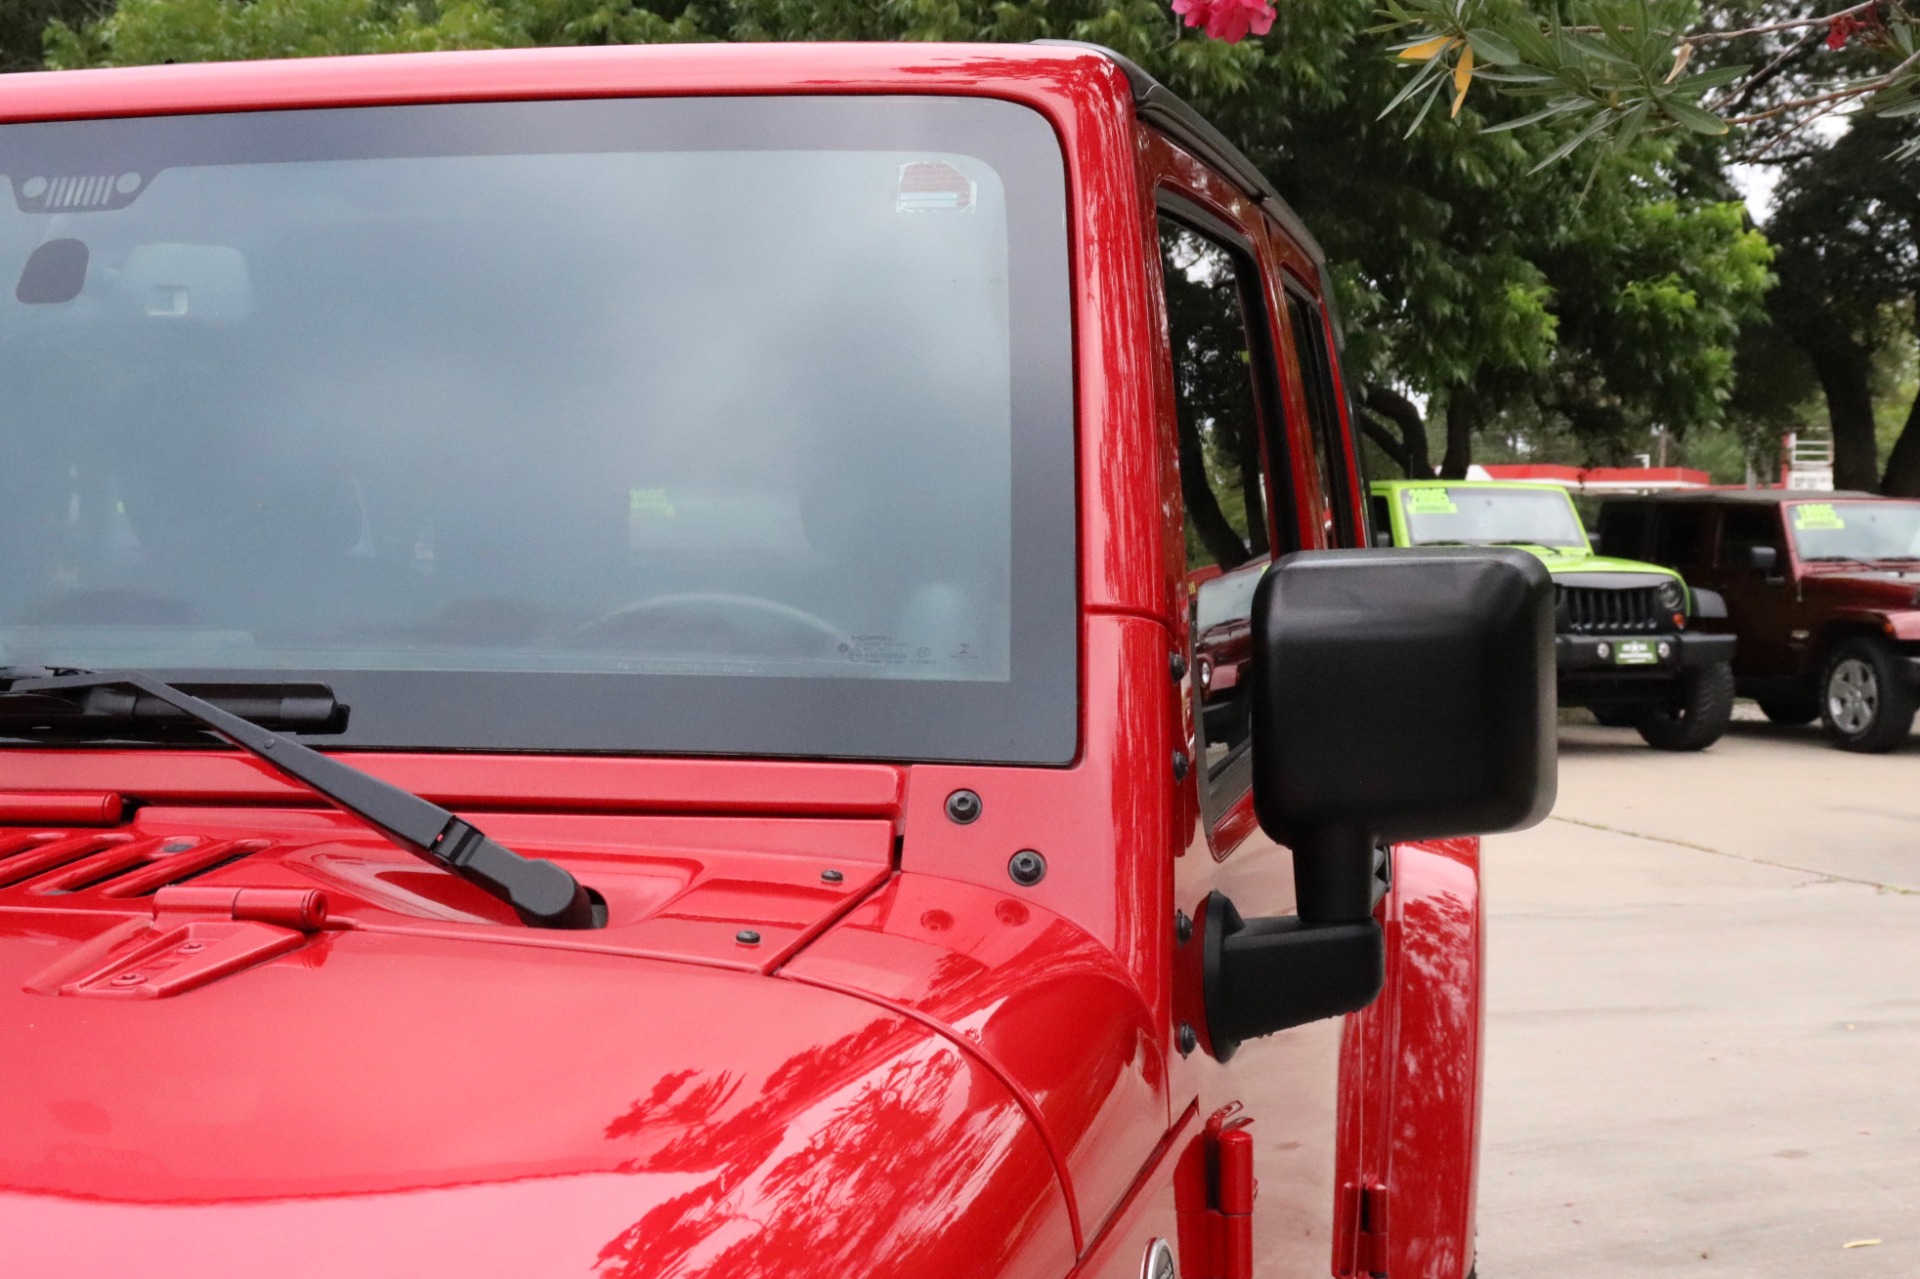 Used-2014-Jeep-Wrangler-Unlimited-Sahara-4WD-4dr-Unlimited-Sahara